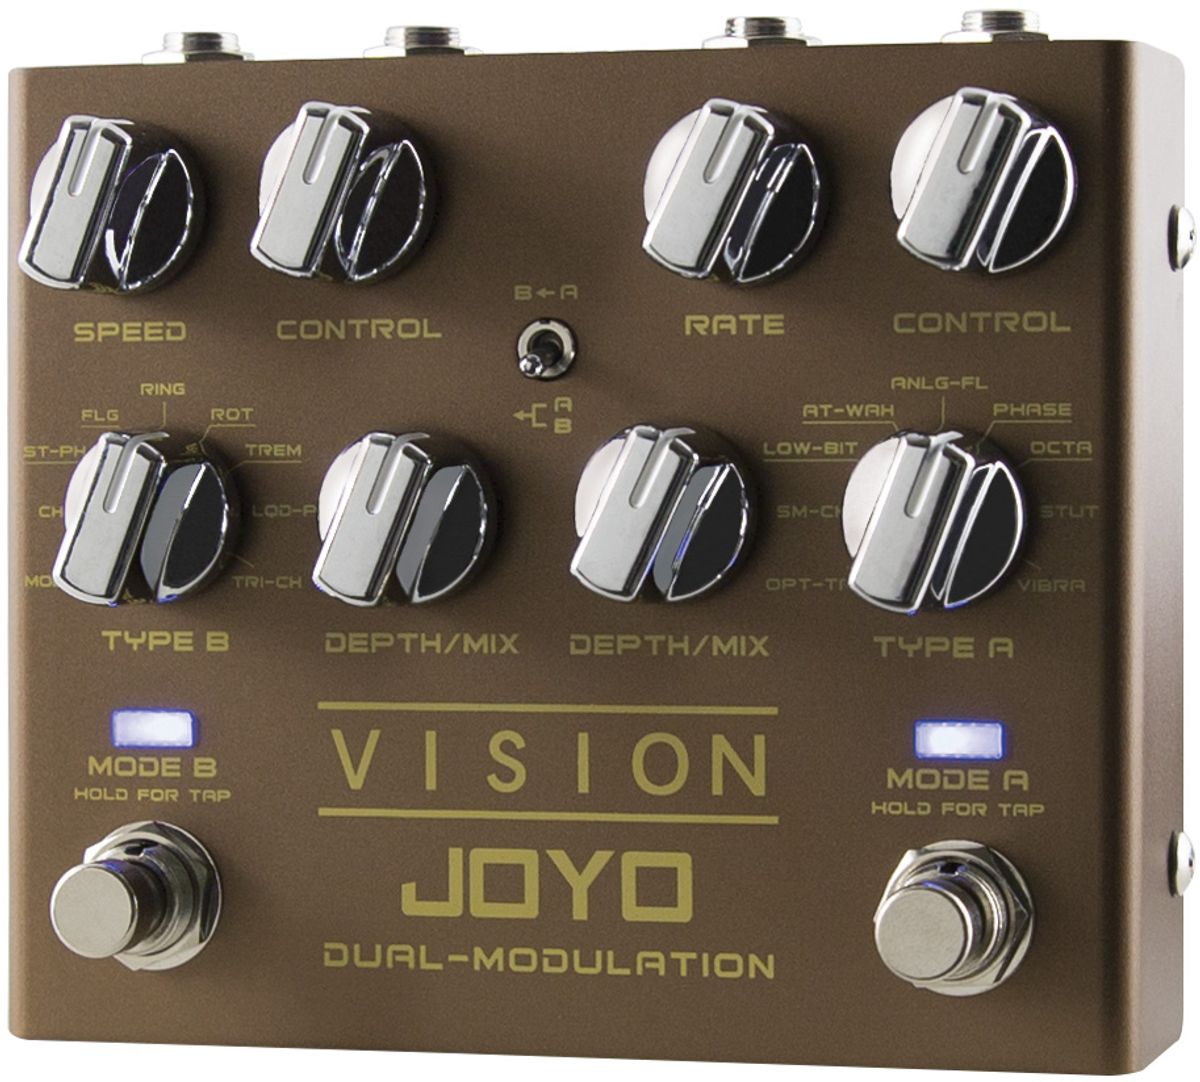 Joyo Vision Dual-Modulation Review